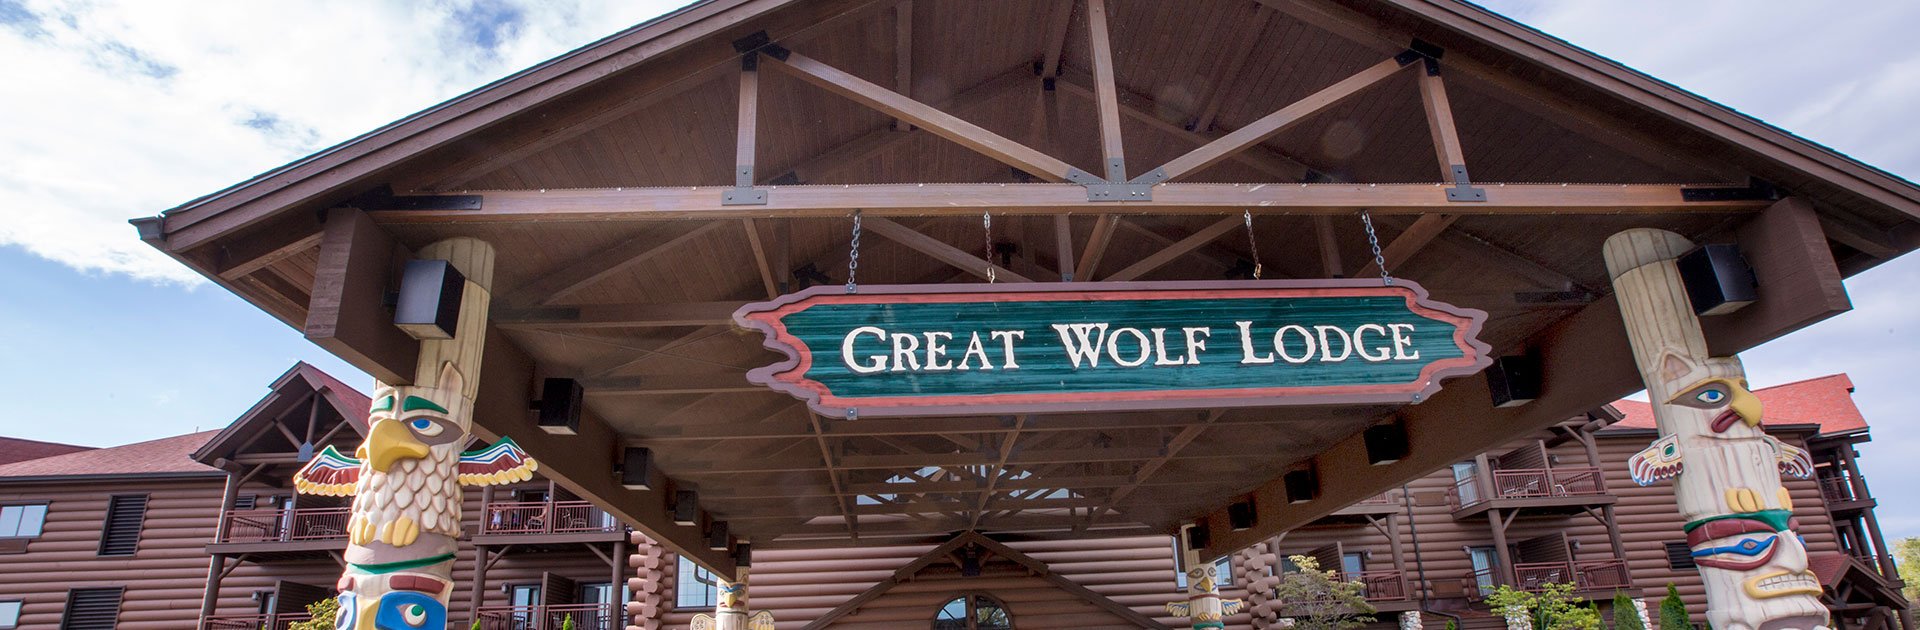 Great Wolf resort Sandusky OH